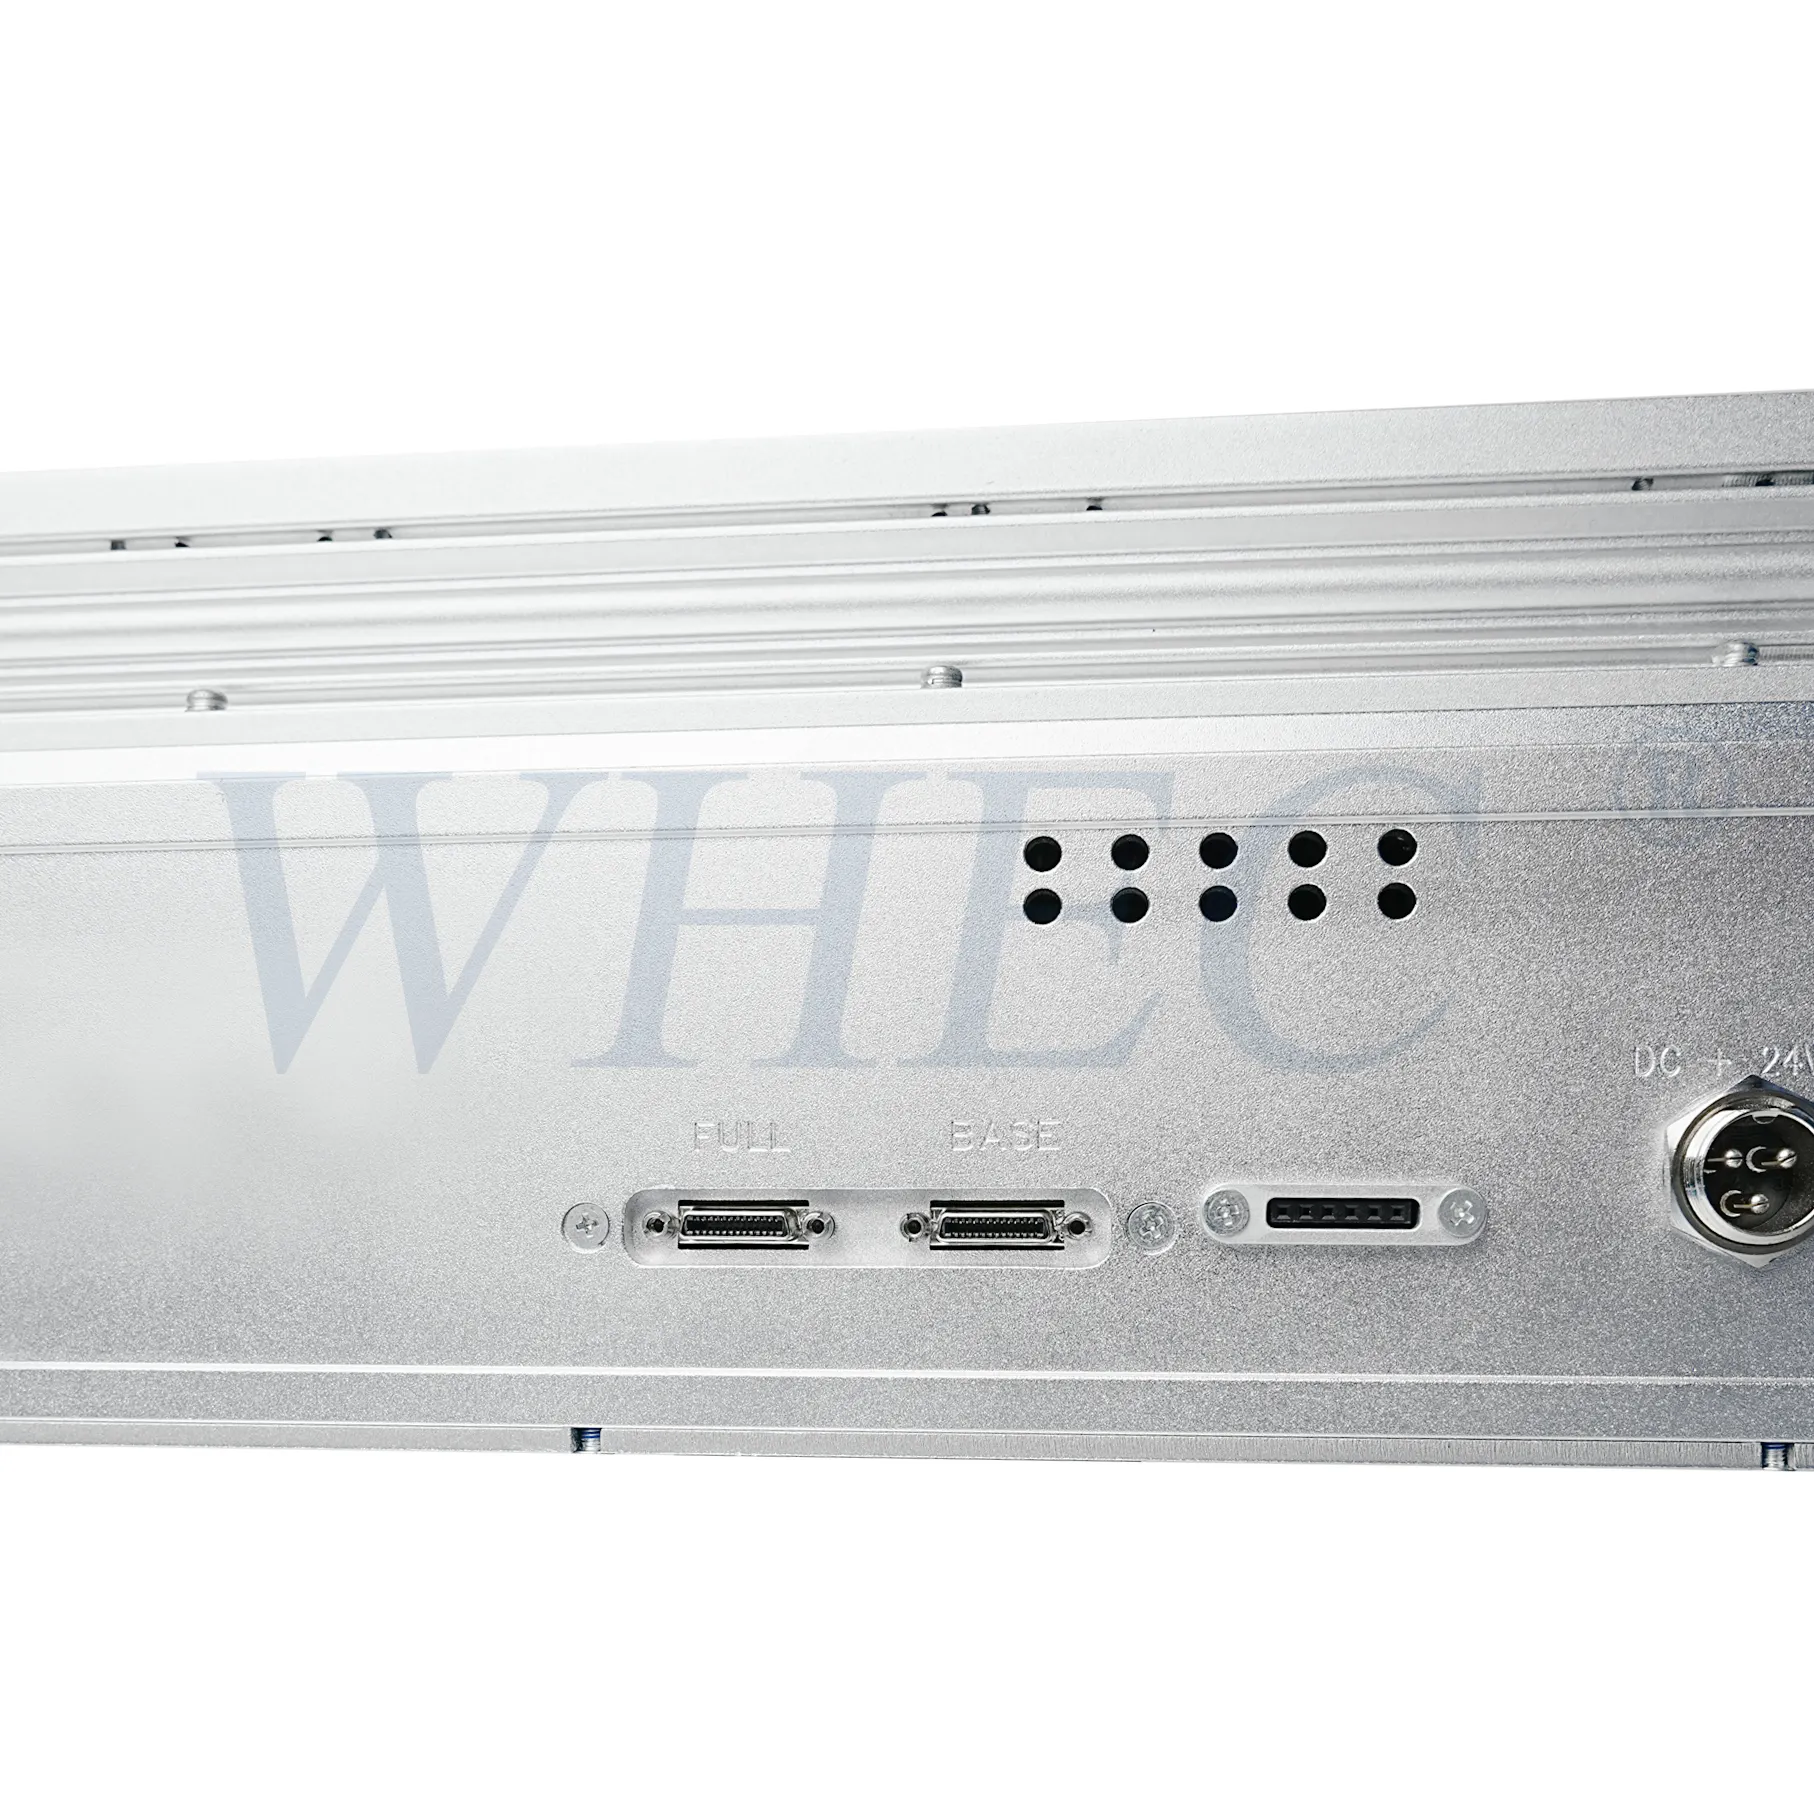 WHEC PL6R360TDF 360 מ""מ CIS משולבת אור בדיקת ראיית מכונה בדיקת קו בדיקה באינטרנט סריקה מצלמת ראיית מכונה